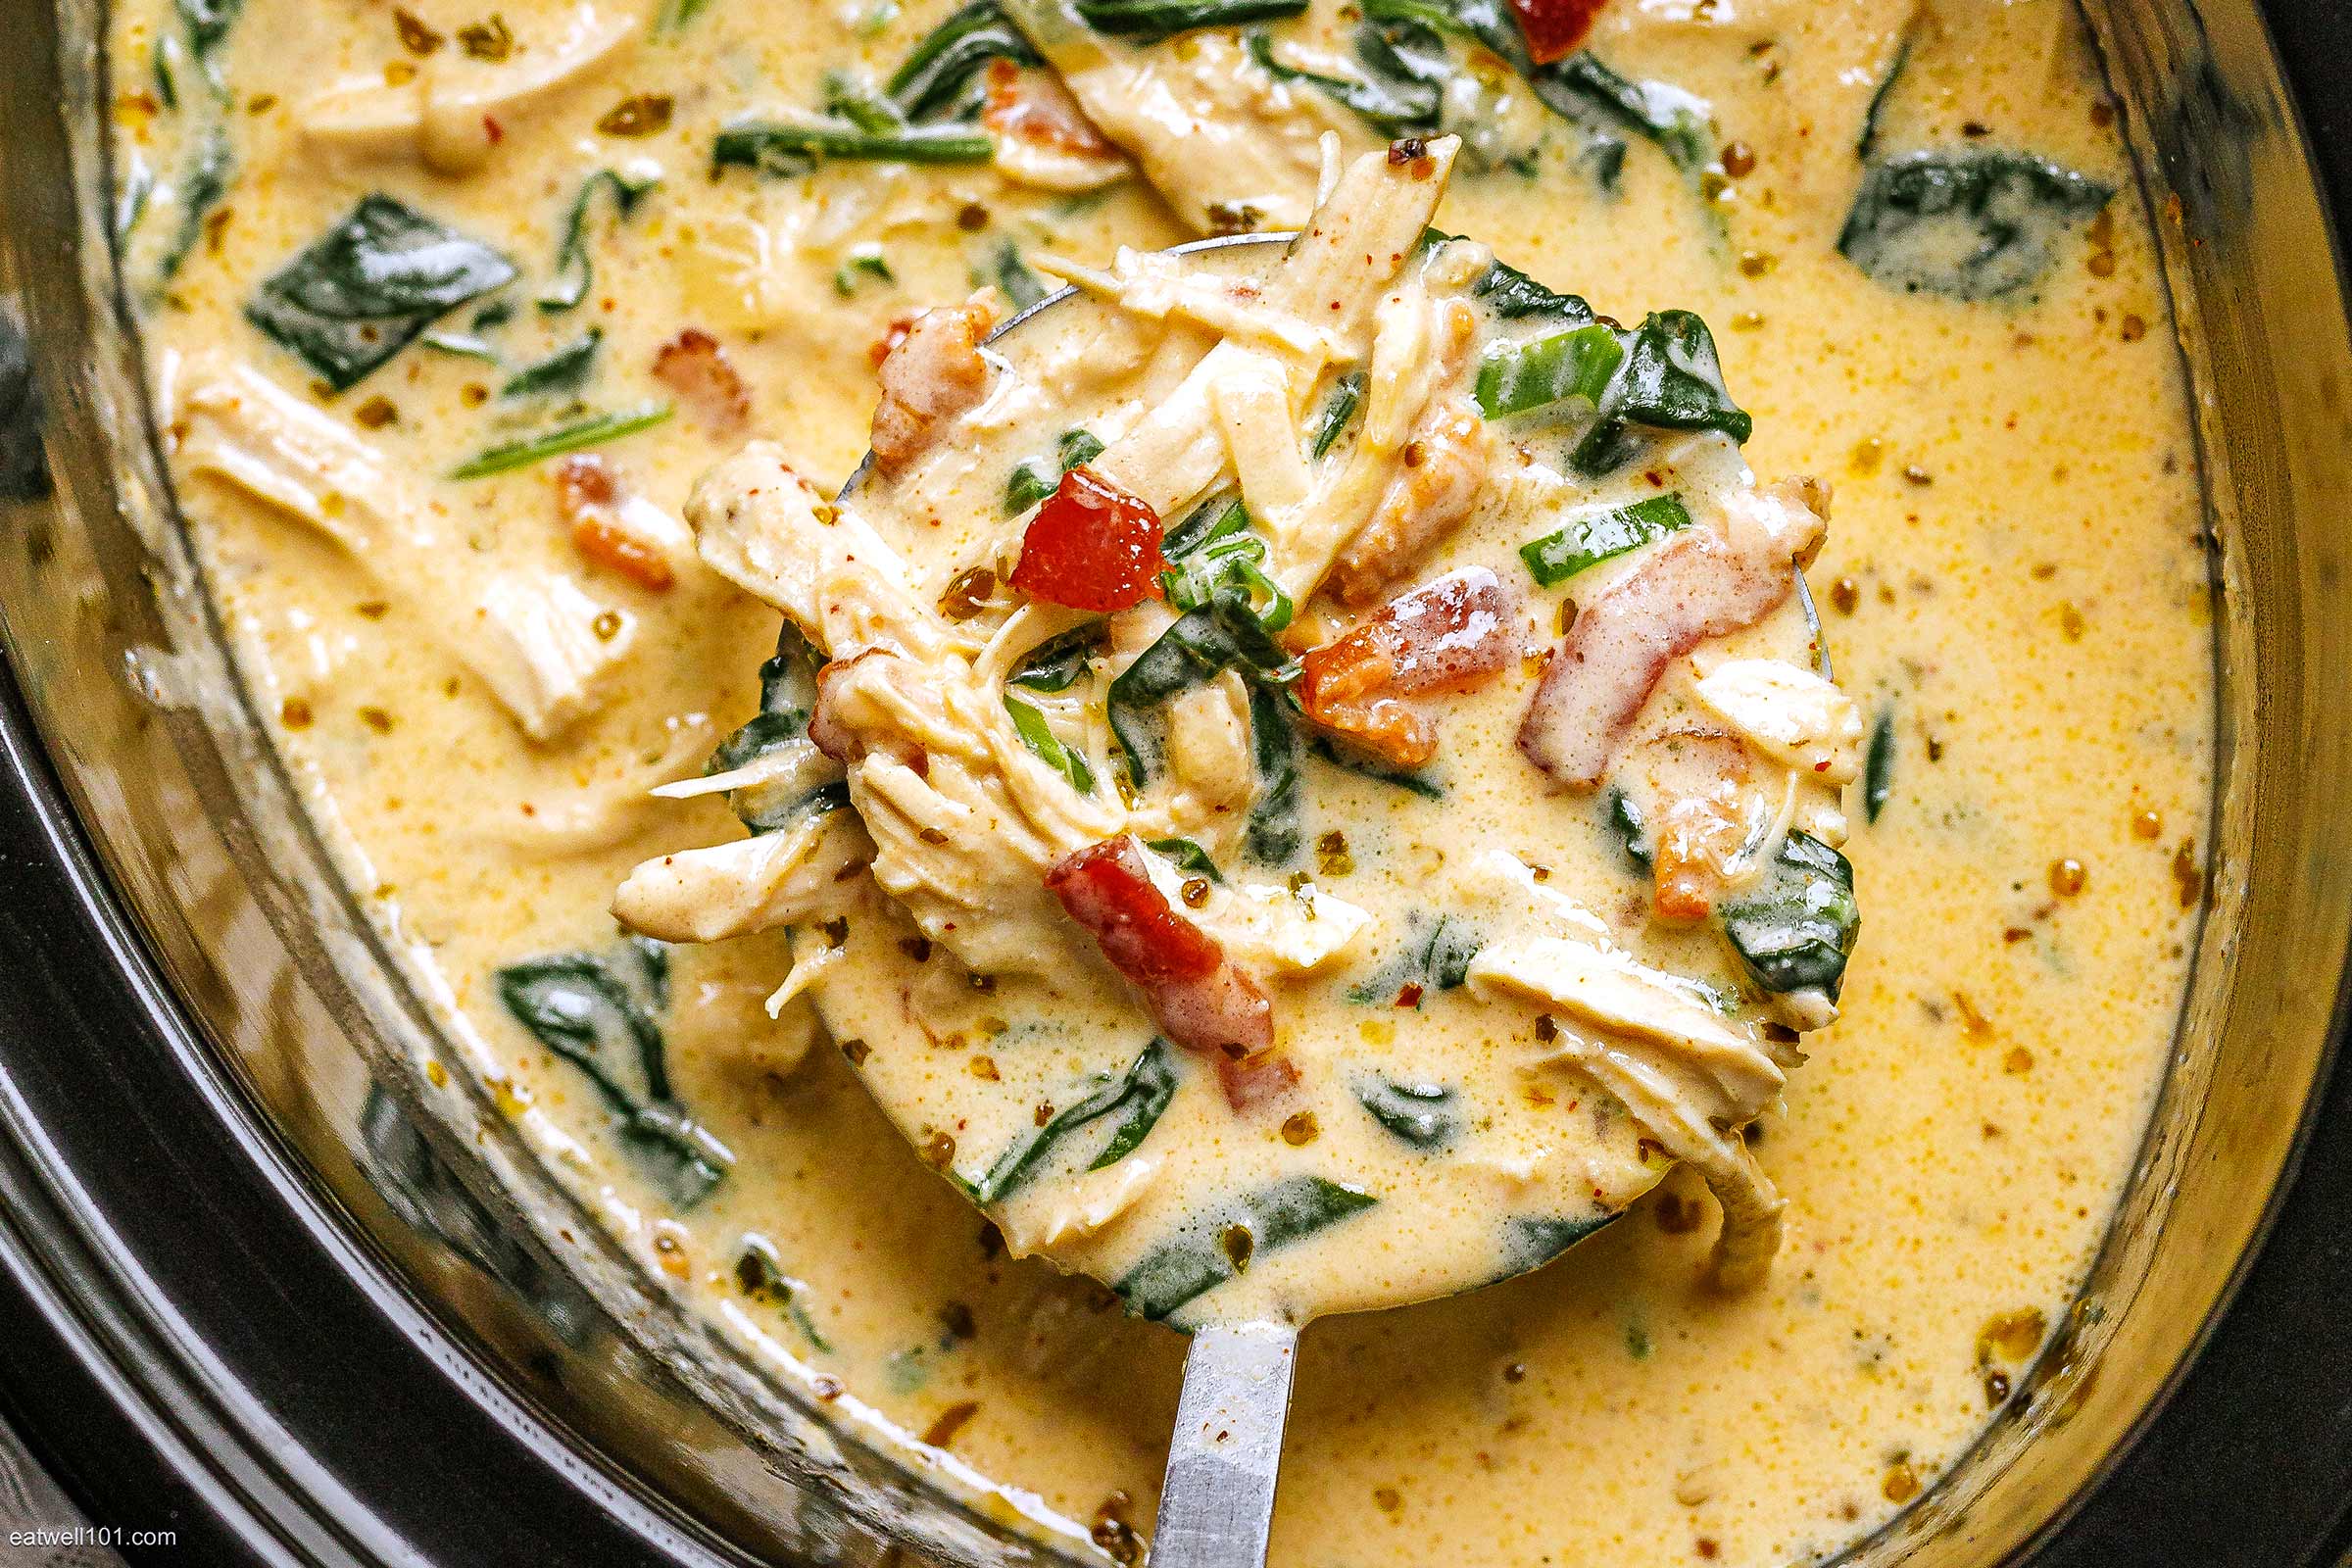 https://www.eatwell101.com/wp-content/uploads/2021/04/slow-cooker-crack-chicken-soup-recipe.jpg